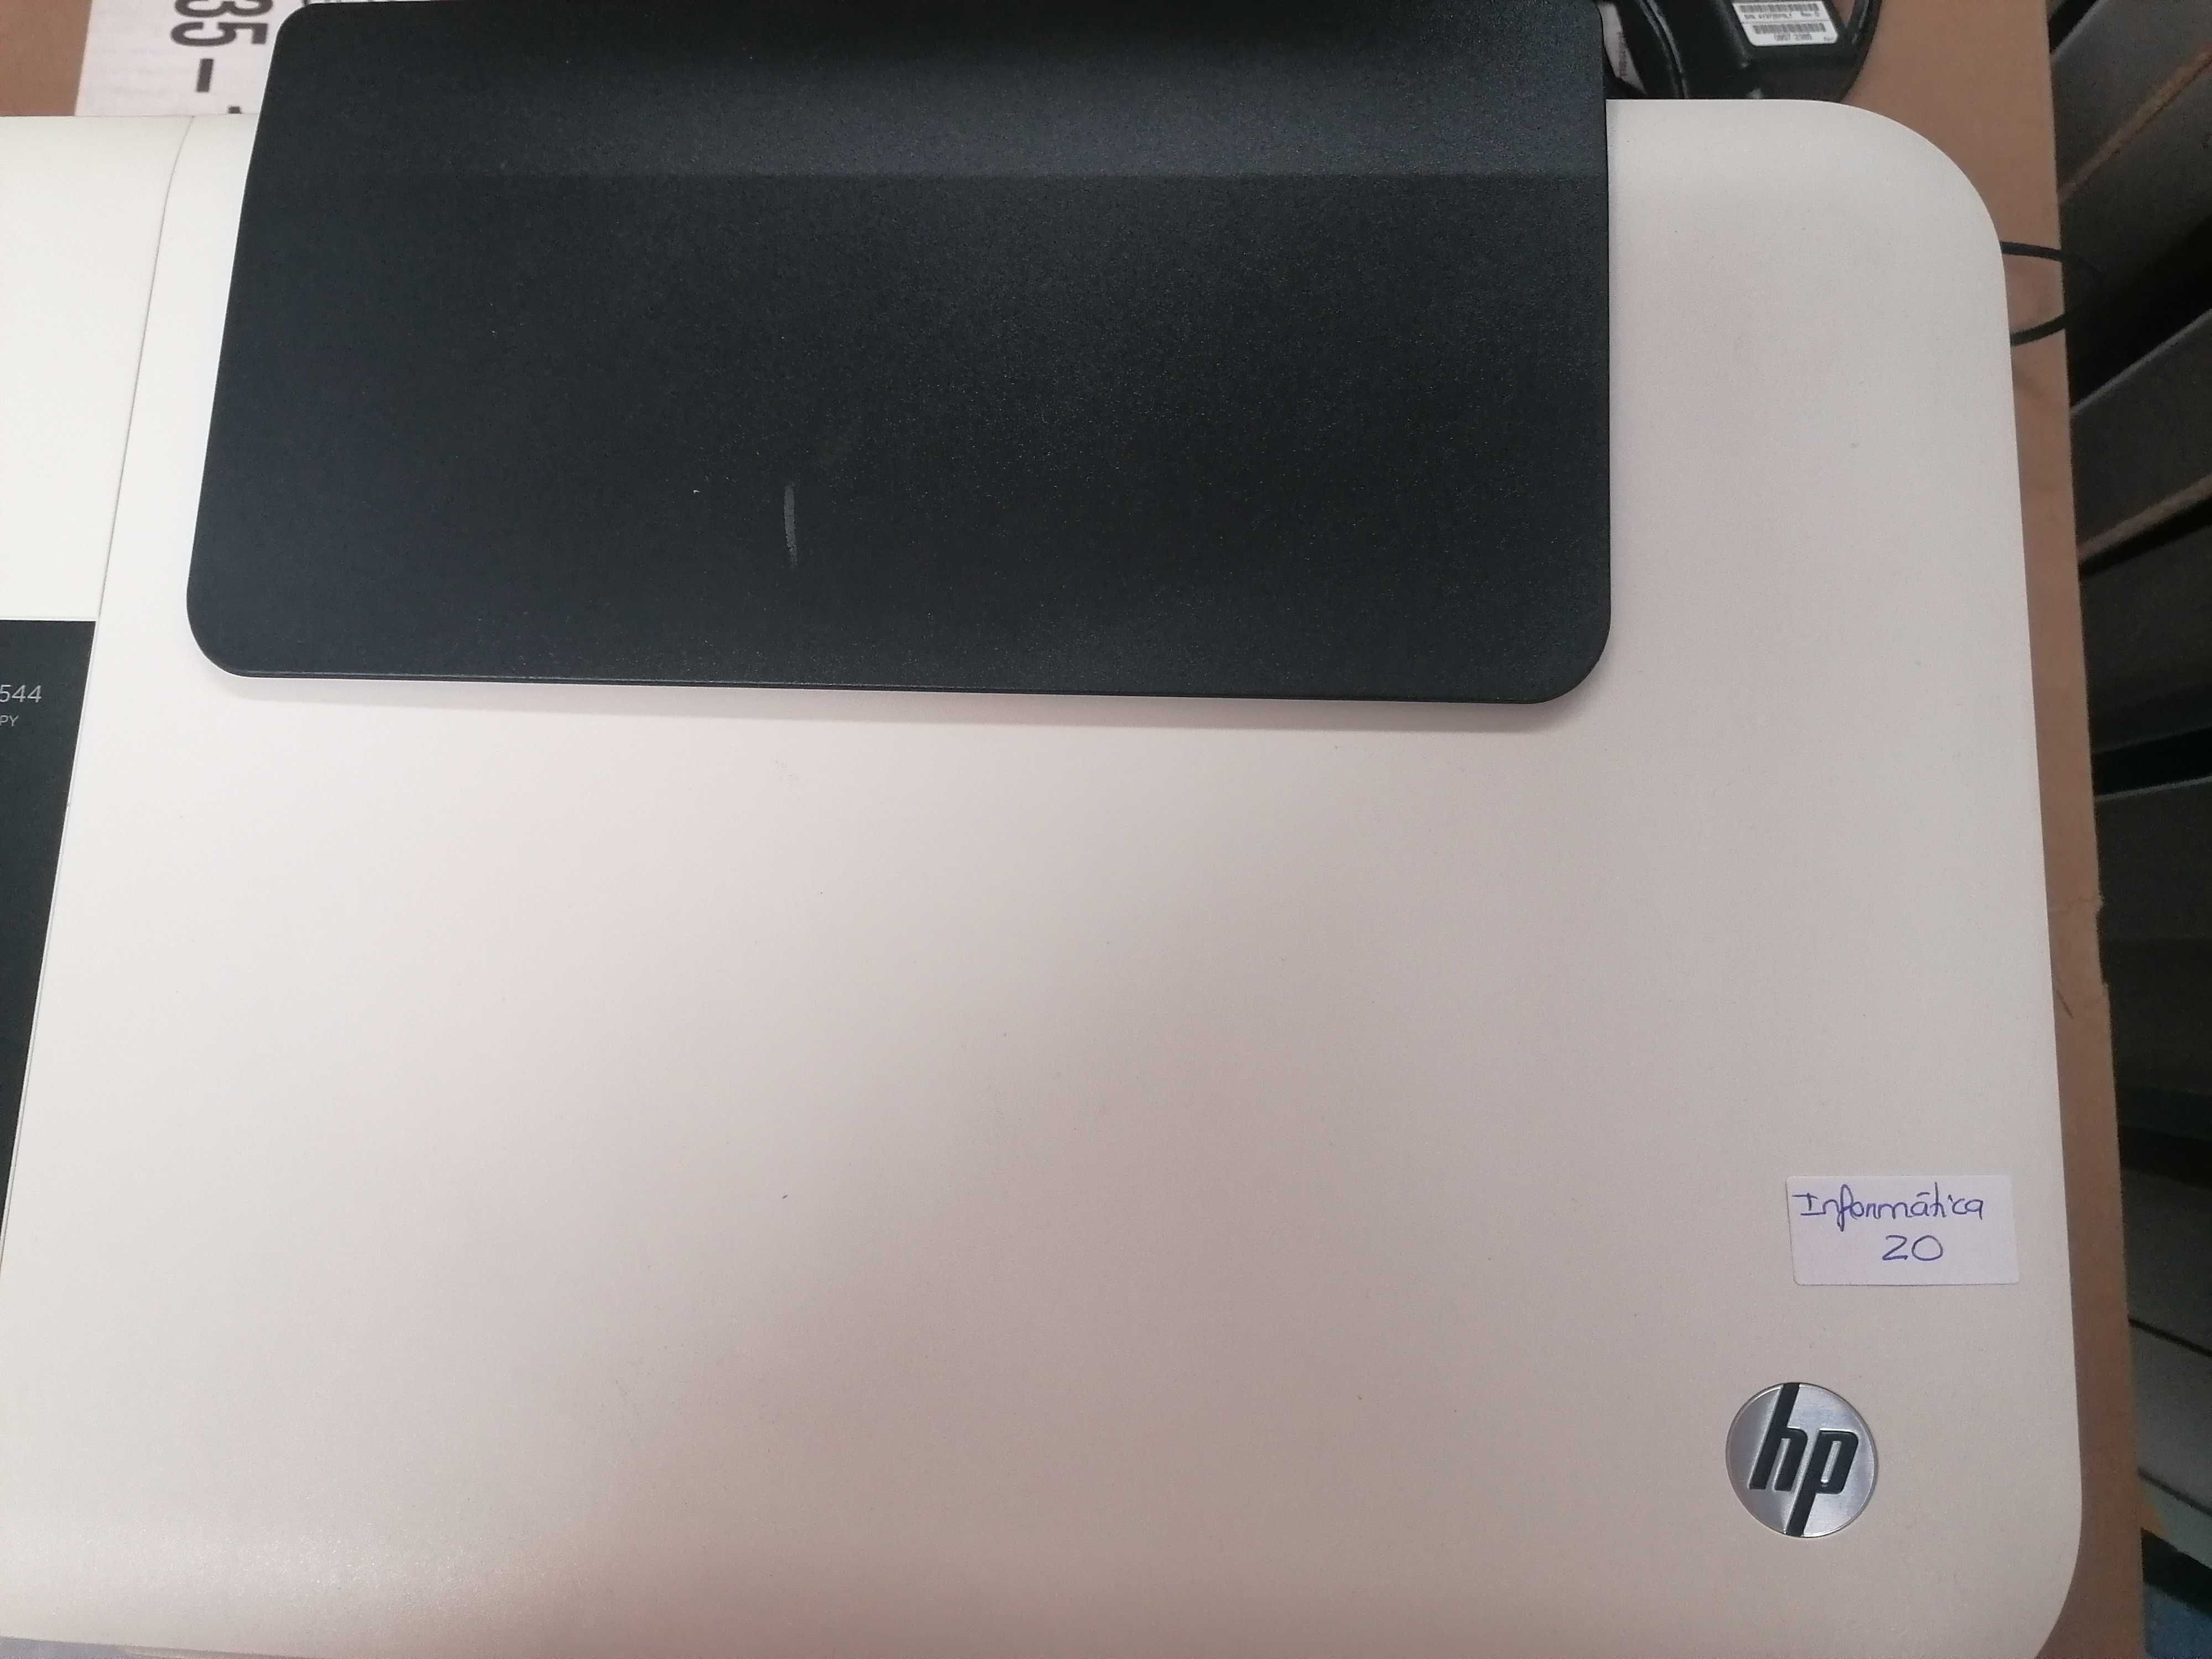 Impressora multifuncional HP Deskjet 2544